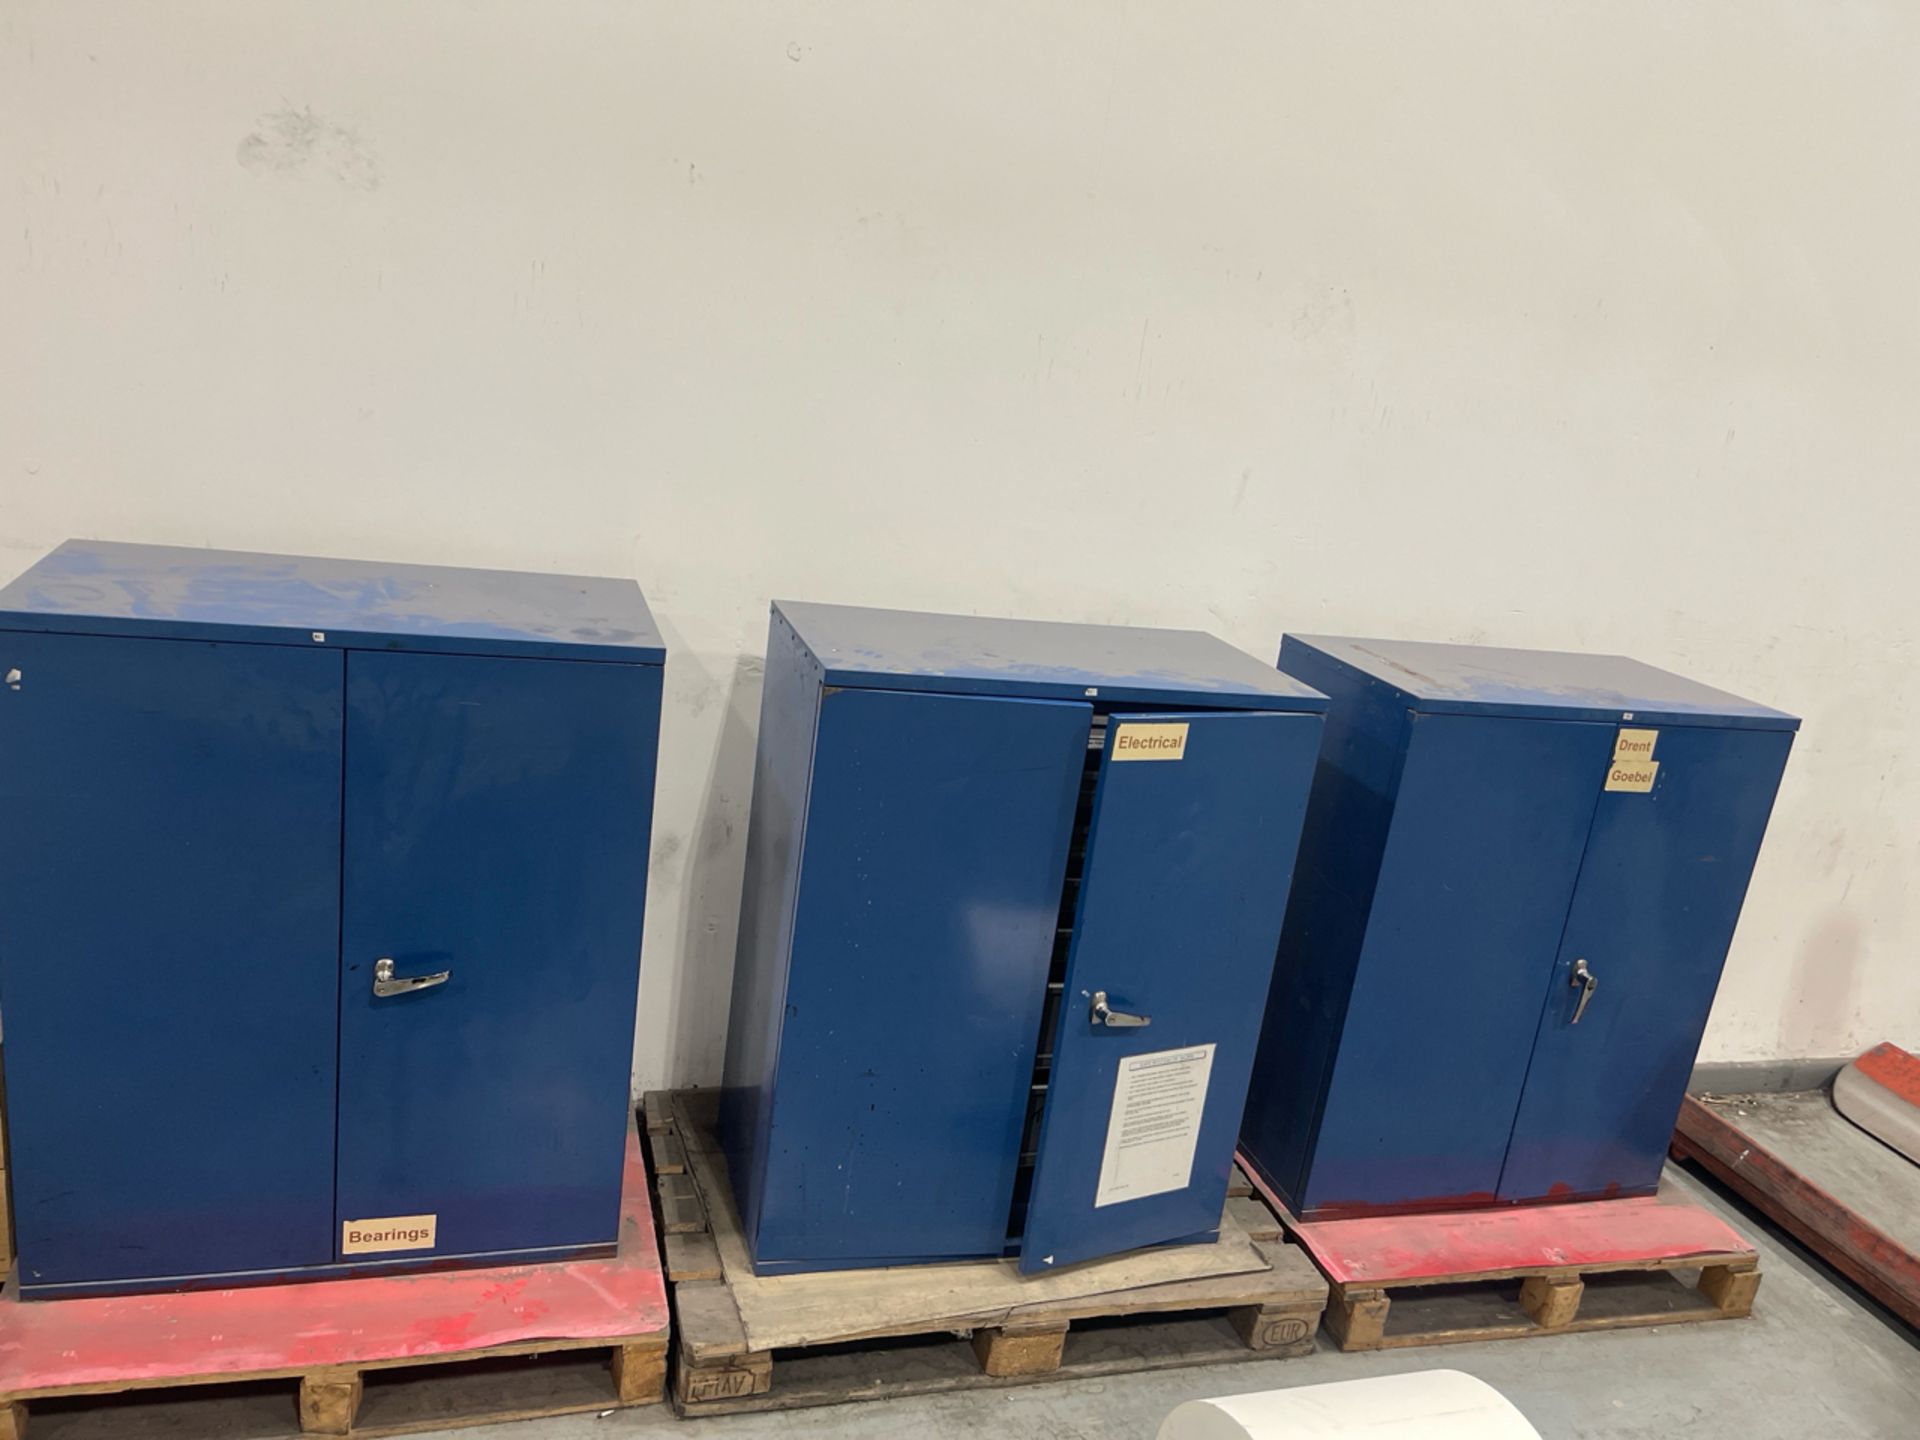 3 x Metal Storage Cabinets